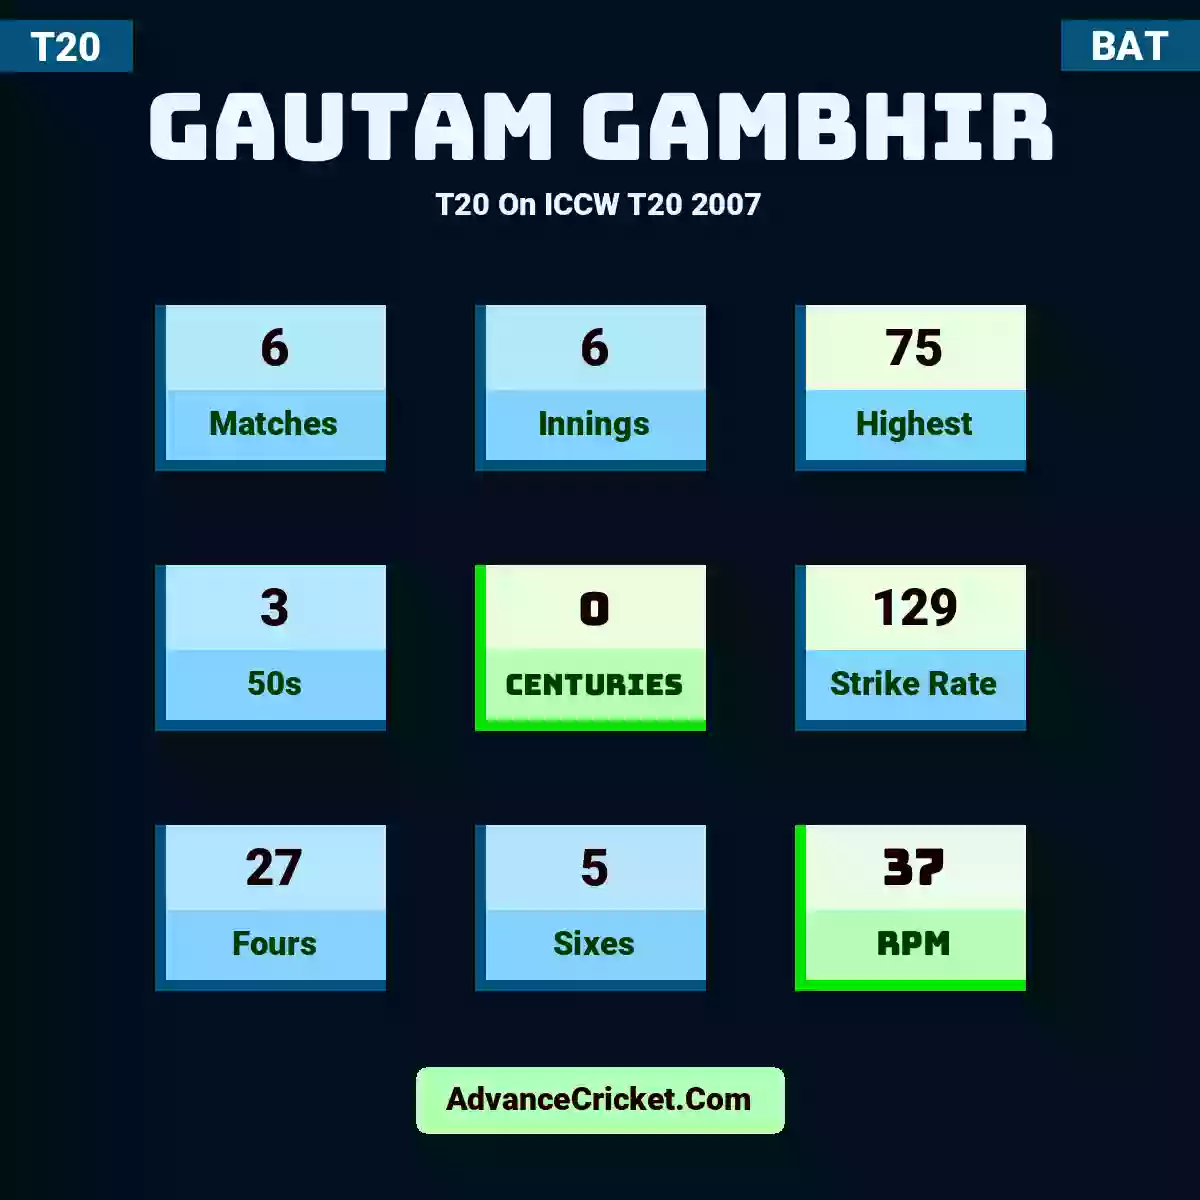 Gautam Gambhir T20  On ICCW T20 2007, Gautam Gambhir played 6 matches, scored 75 runs as highest, 3 half-centuries, and 0 centuries, with a strike rate of 129. G.Gambhir hit 27 fours and 5 sixes, with an RPM of 37.